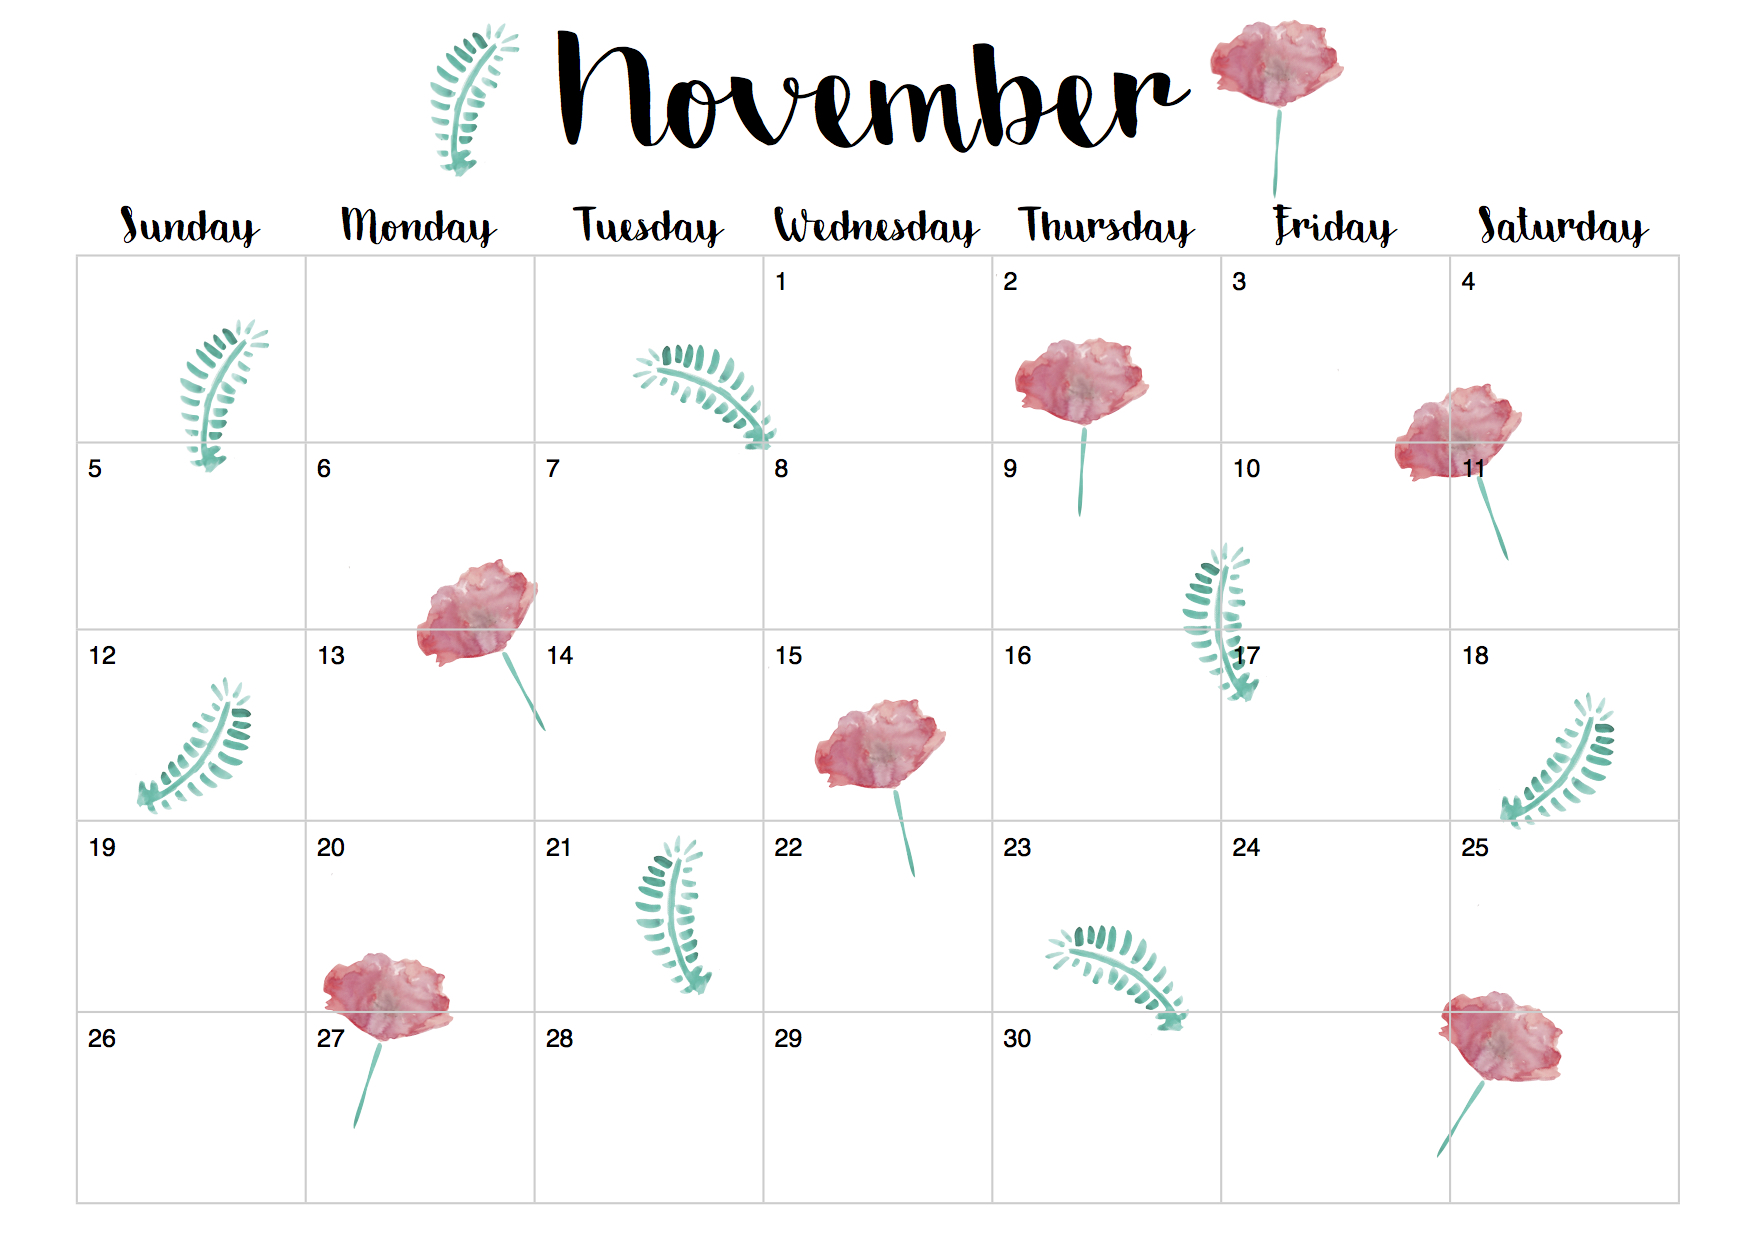 November Calendar.jpg